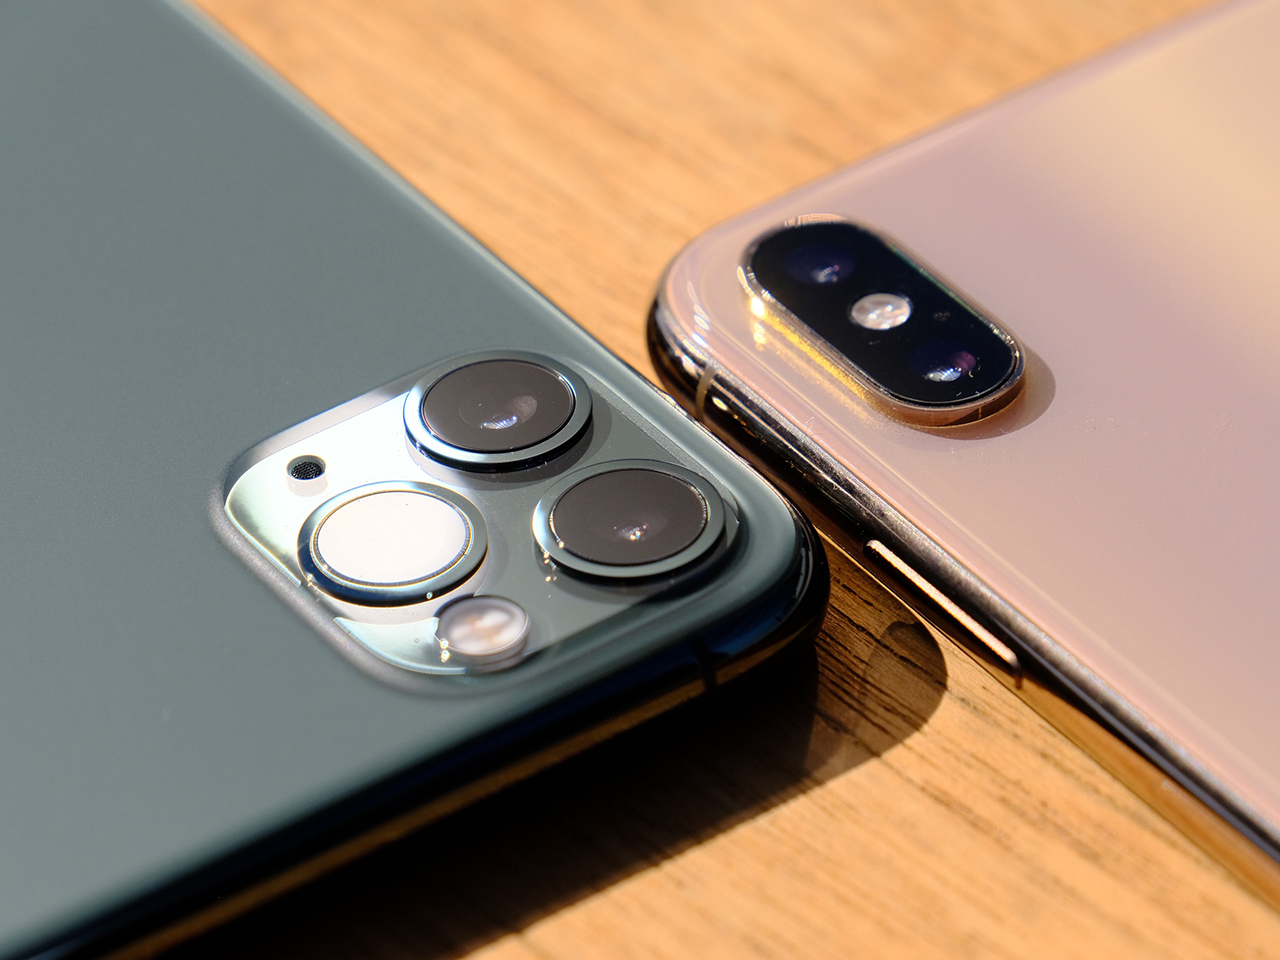 iPhone 11 Pro Max（左）とiPhone XS Max（右）のカメラ部分の比較